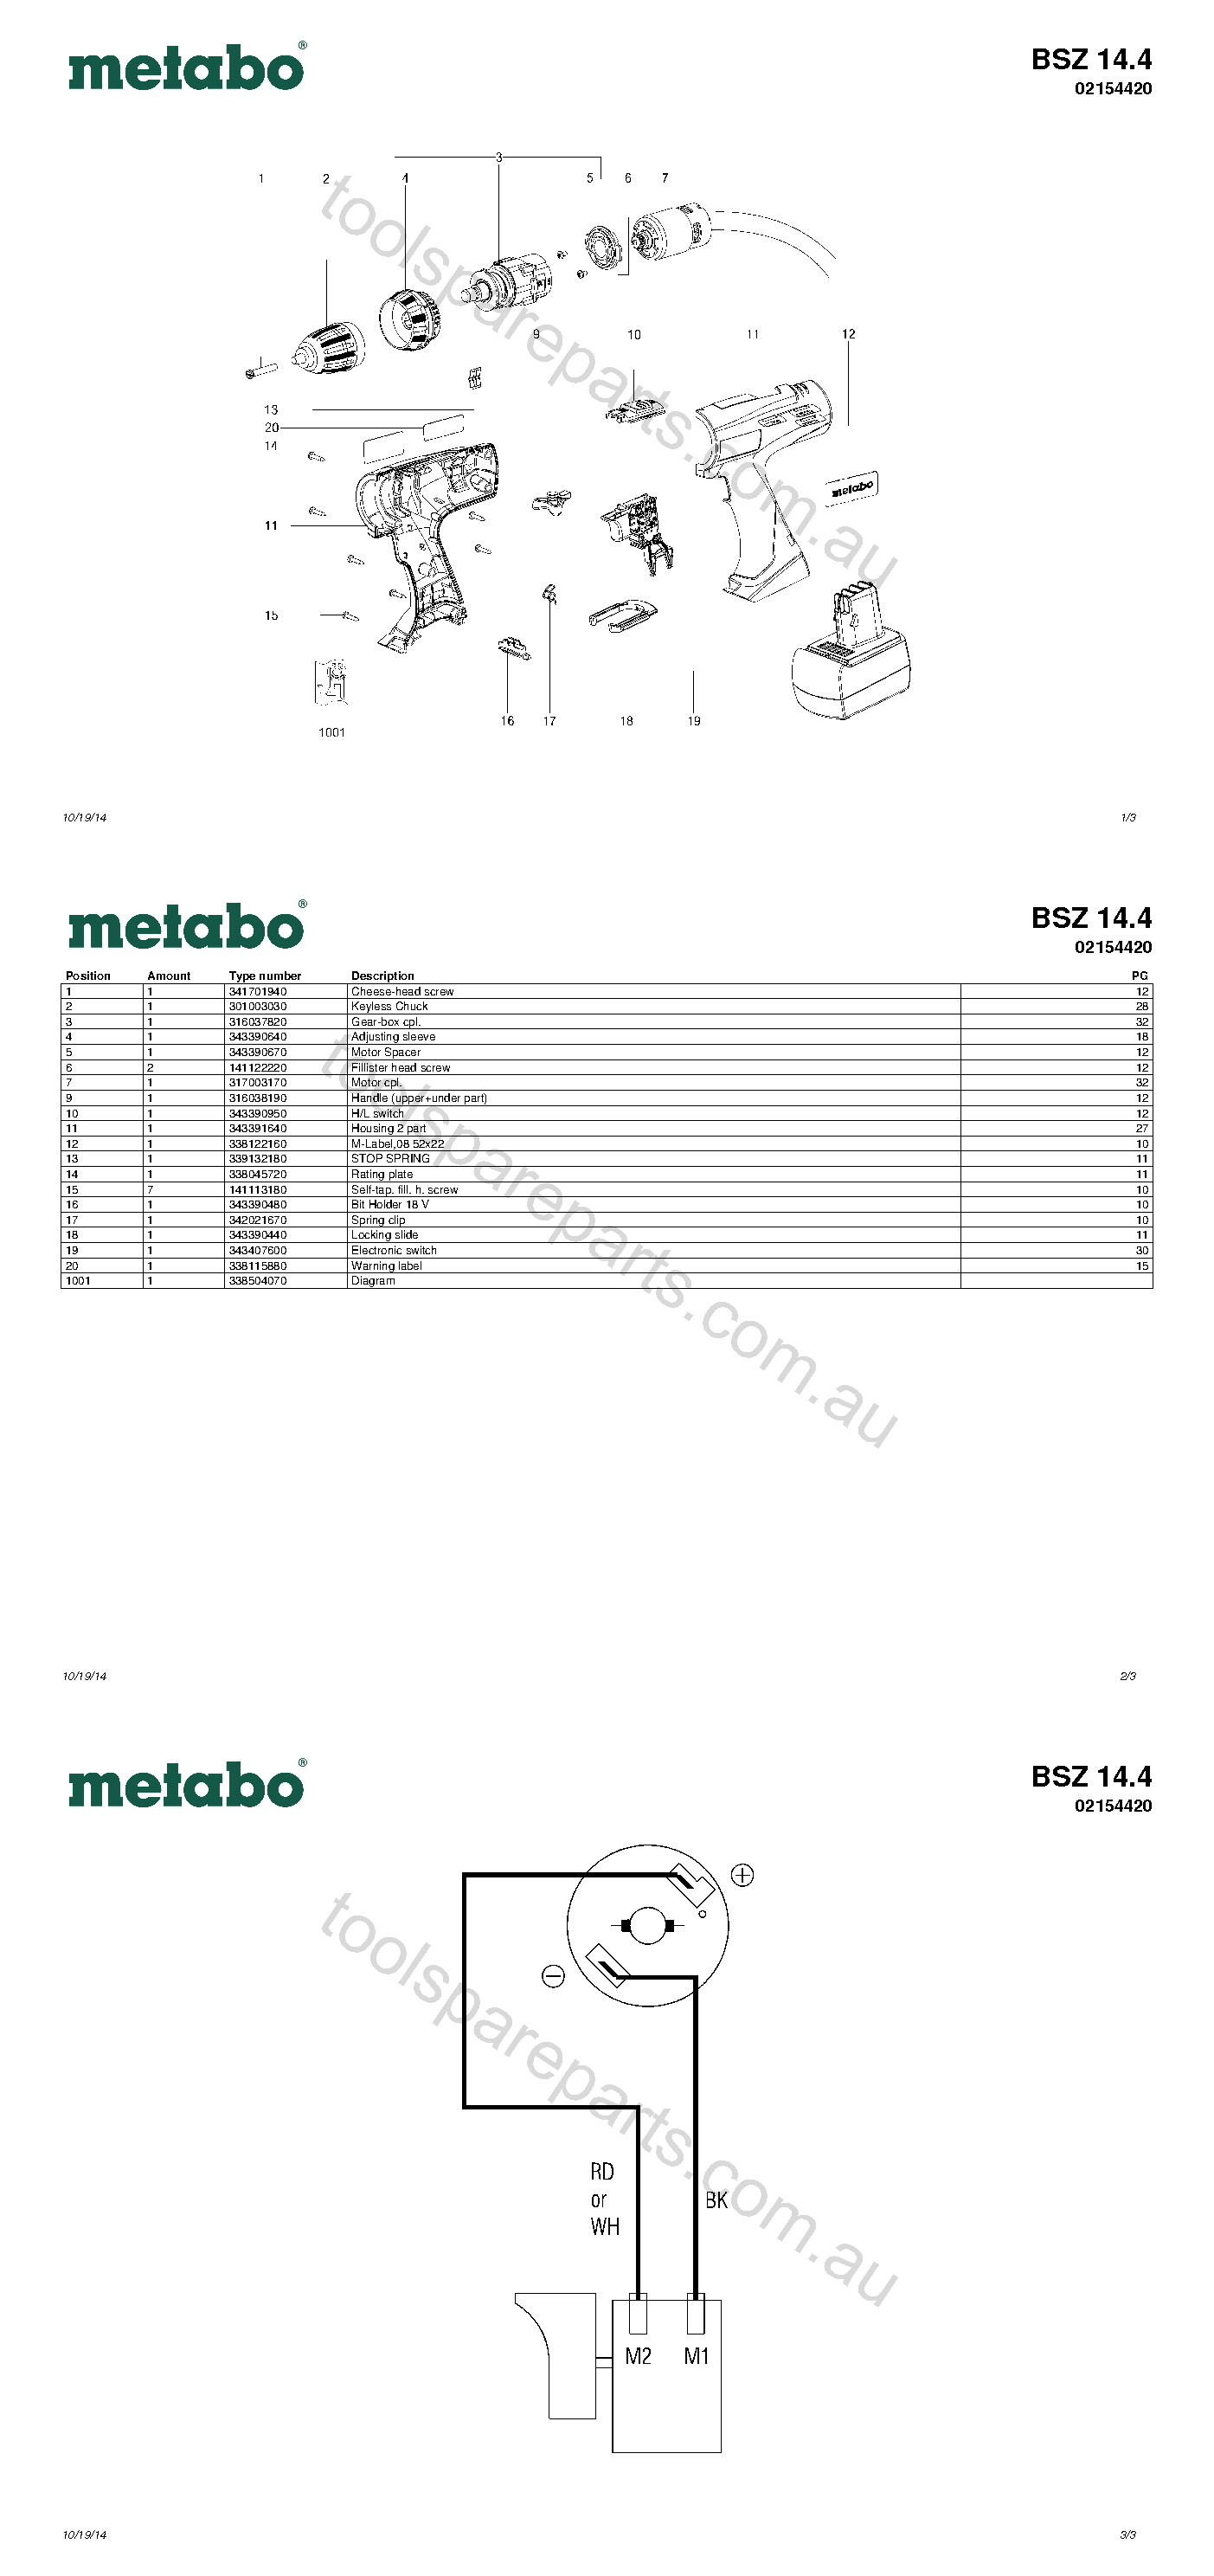 Metabo BSZ 14.4 02154420  Diagram 1